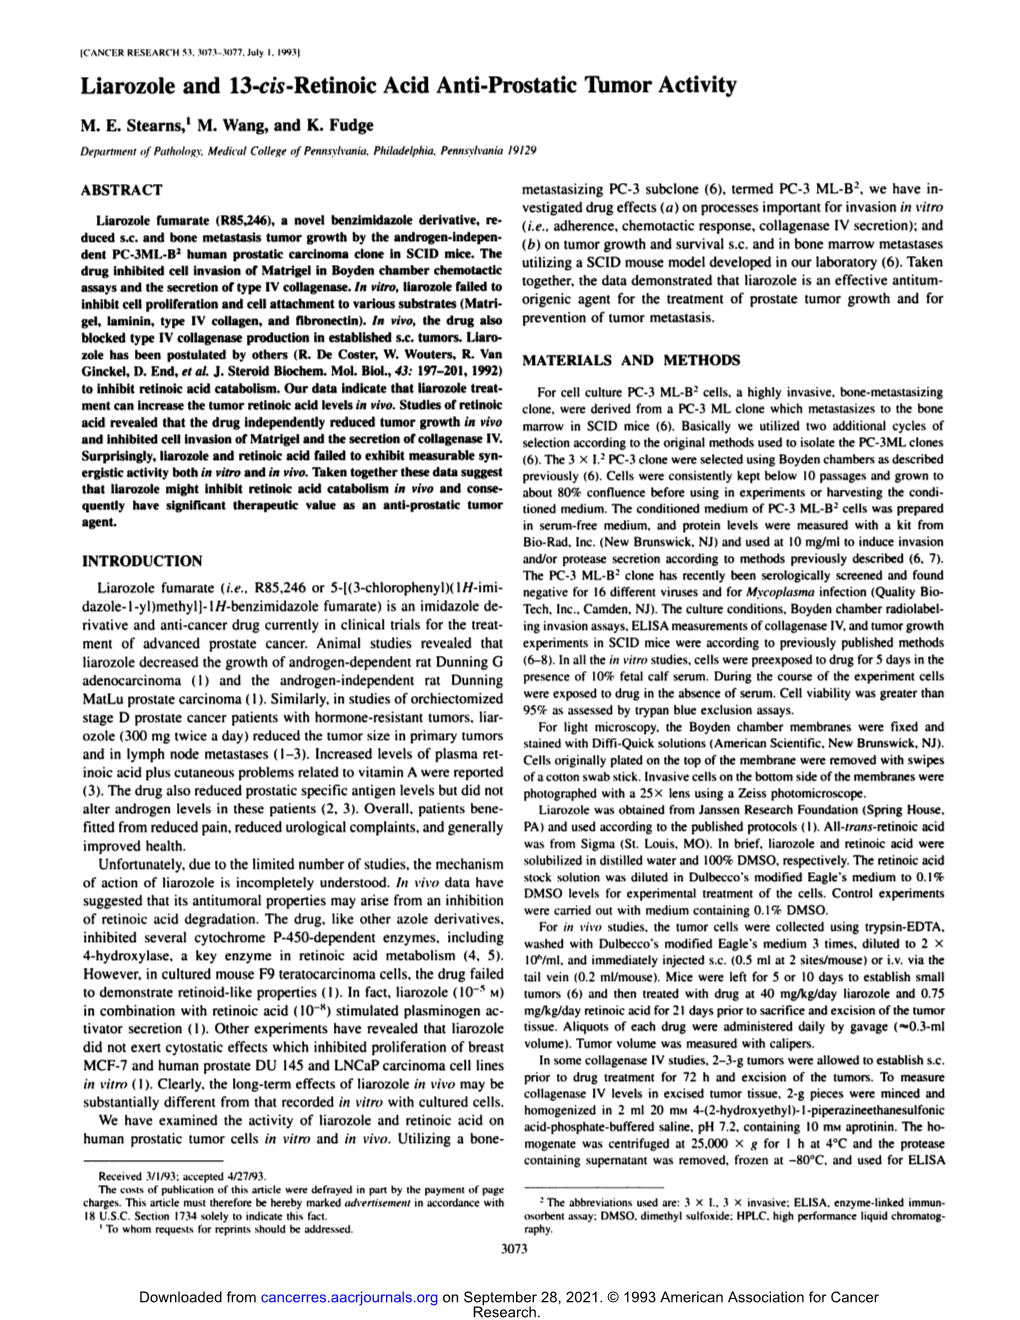 Liarozole and 13-C/S-Retinoic Acid Anti-Prostatic Tumor Activity